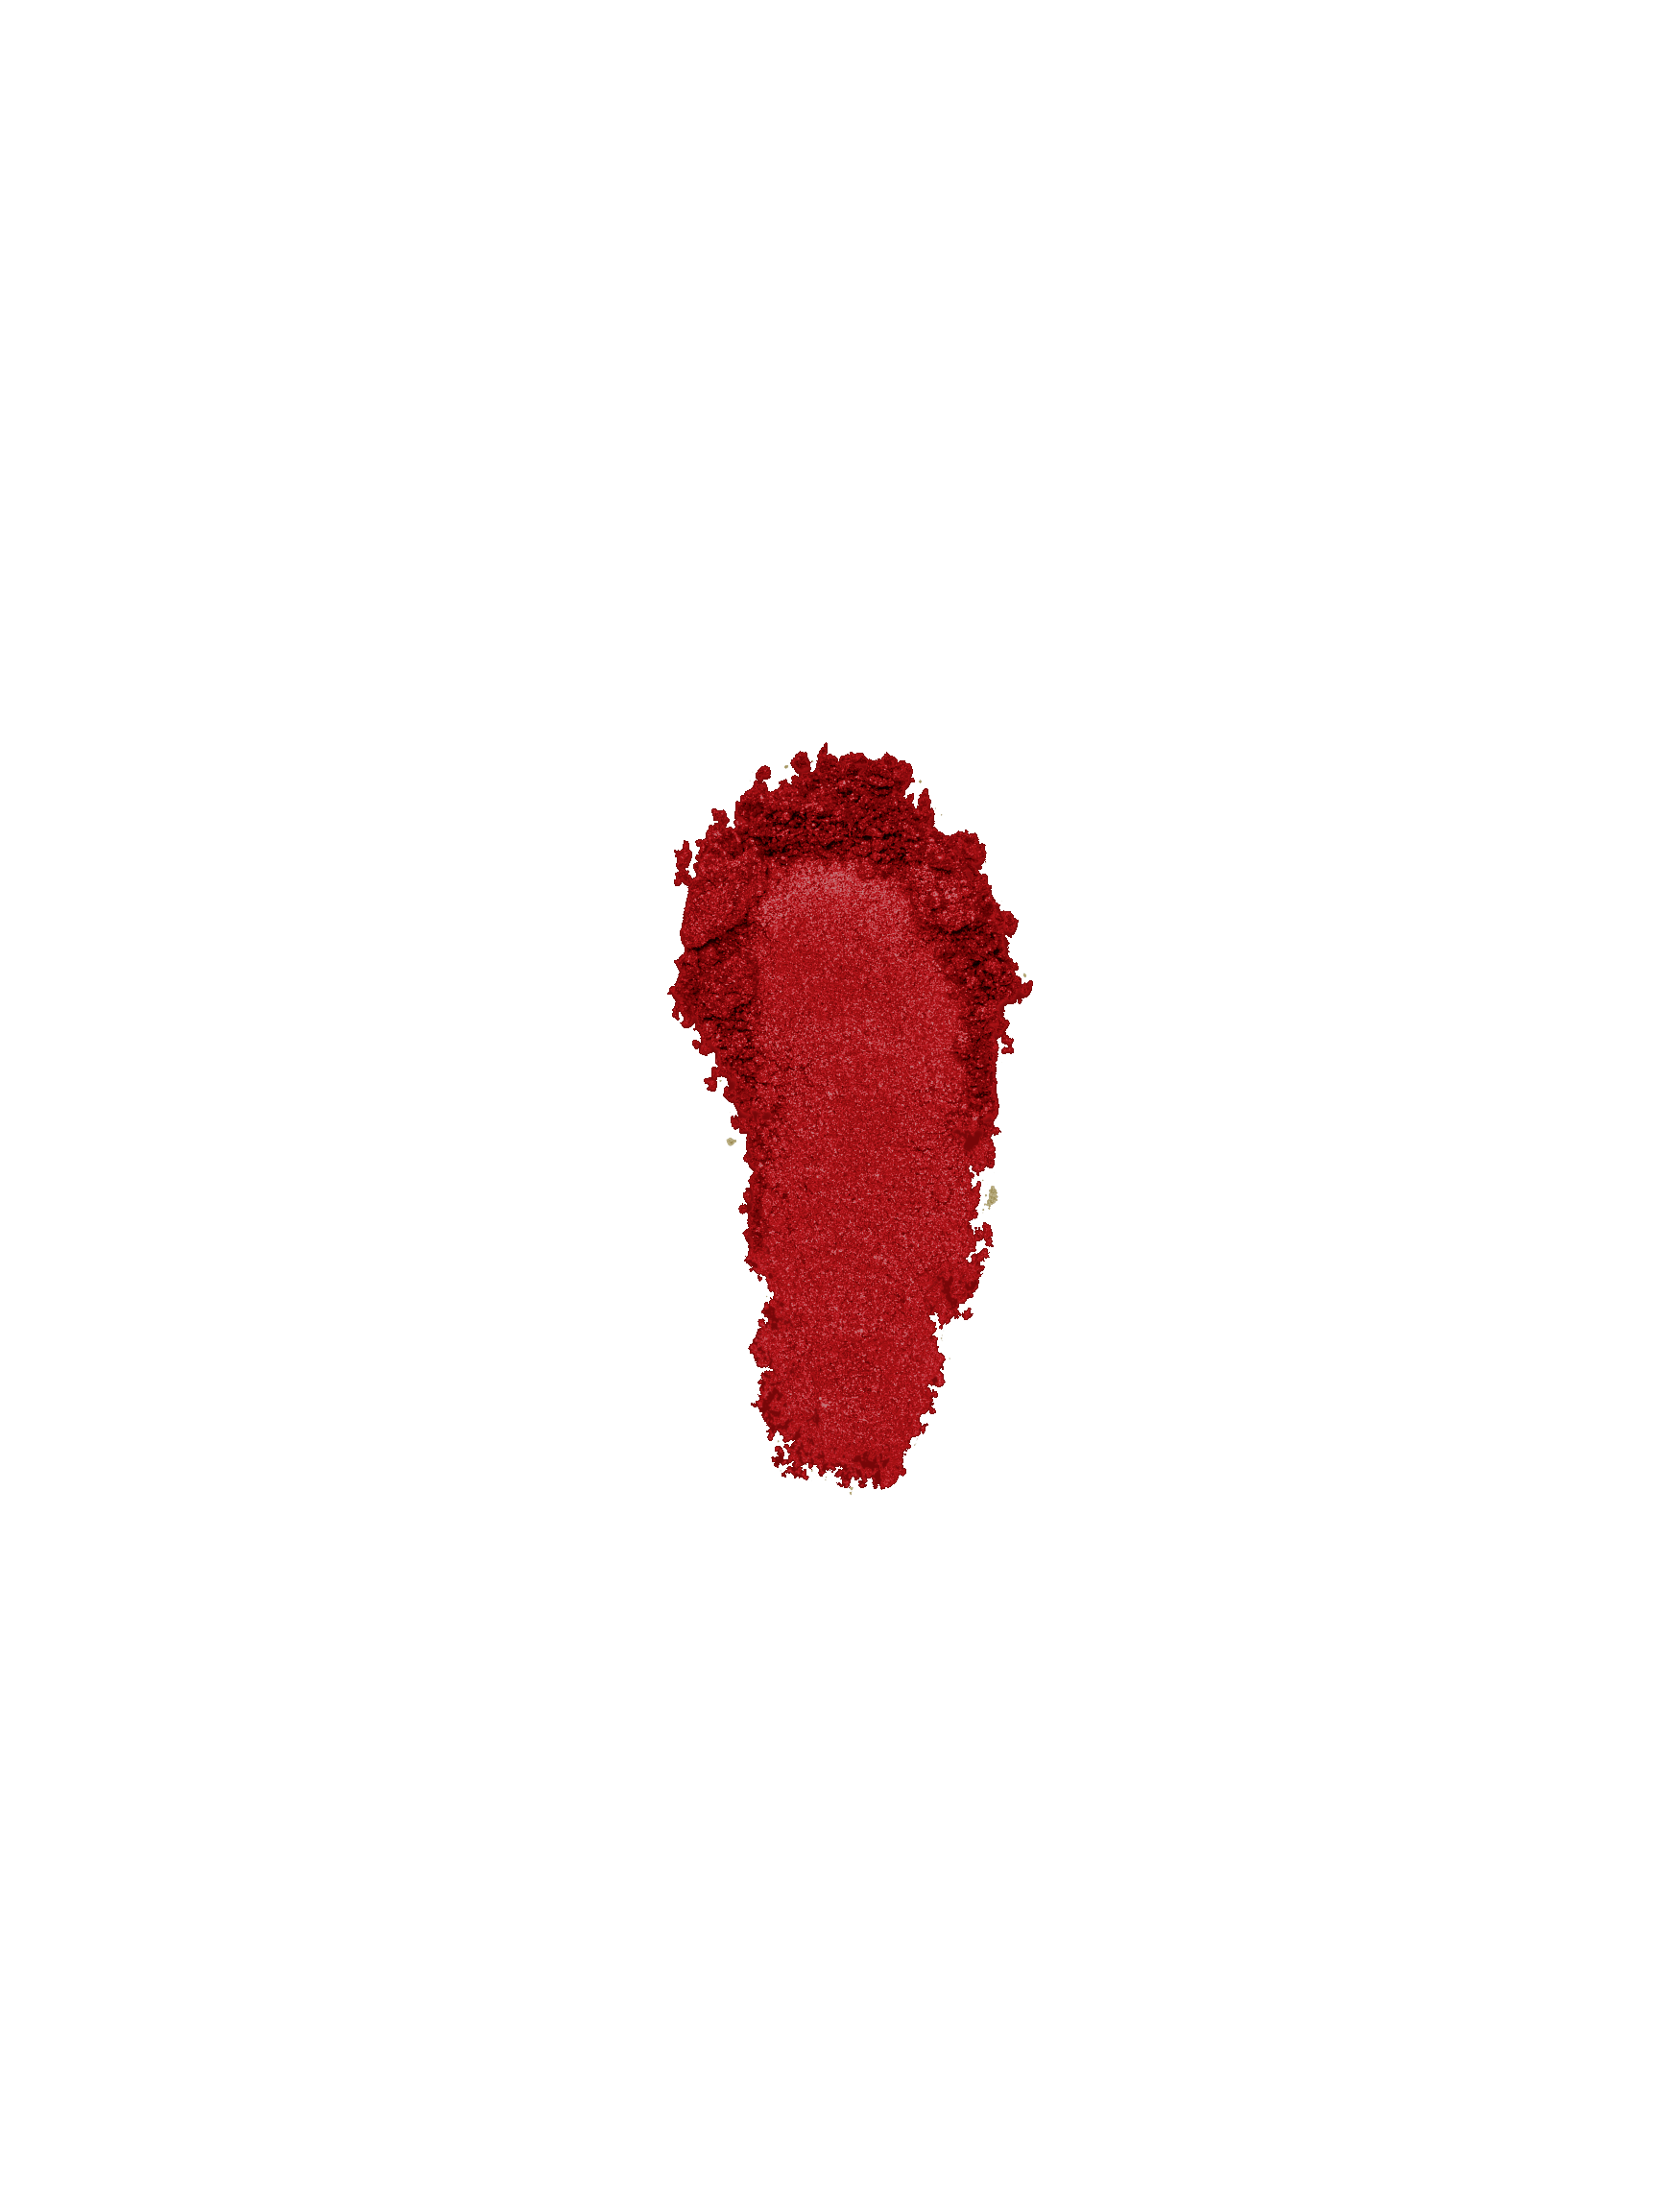 Sample of CHR-13 Ruby Crown Lust Dust by Notpolish